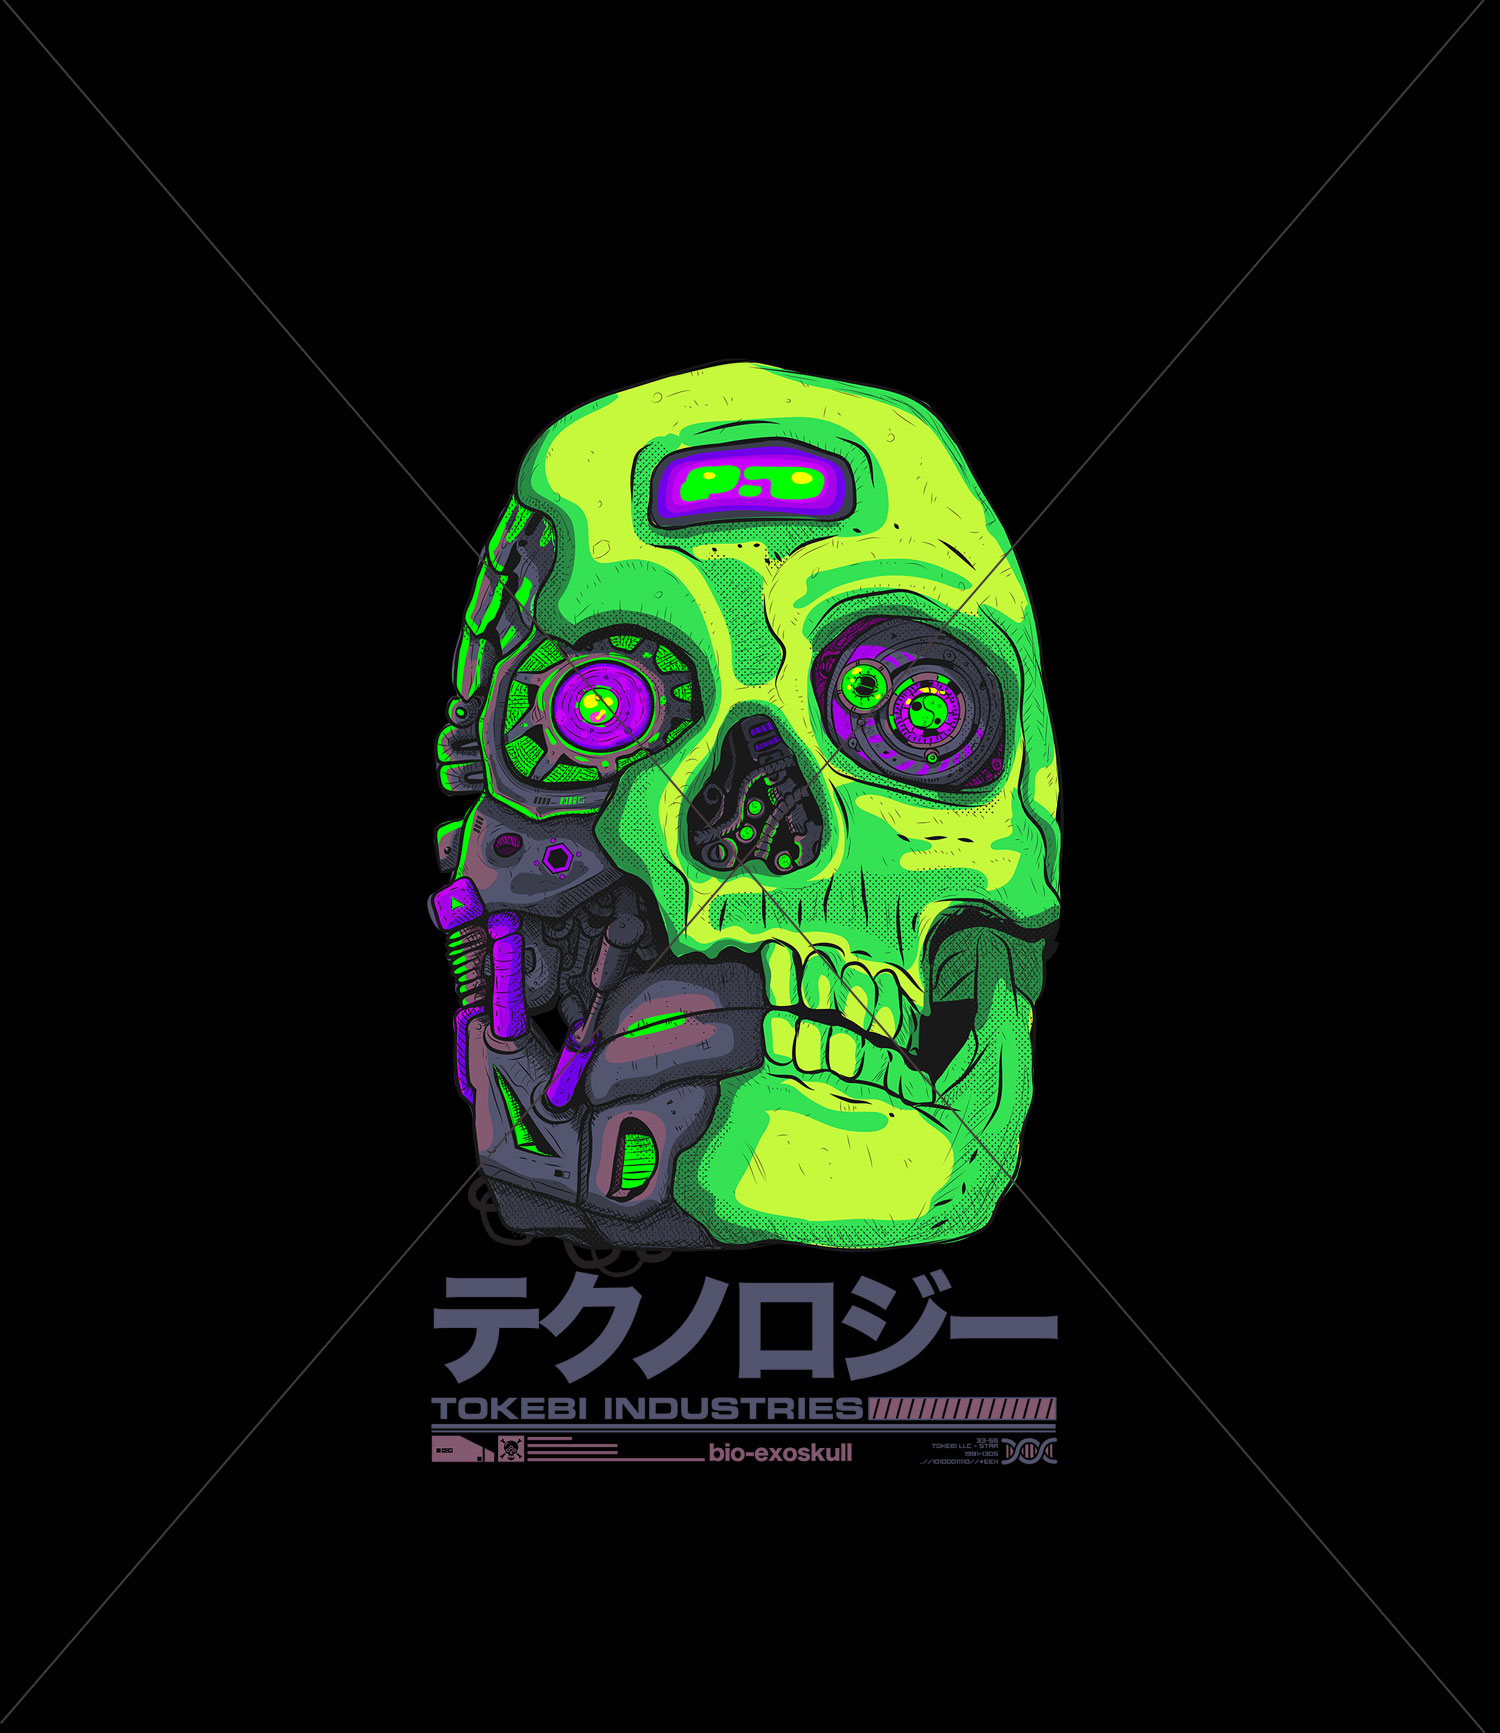 Tokebi Skull Art - Terminator - Independent brand